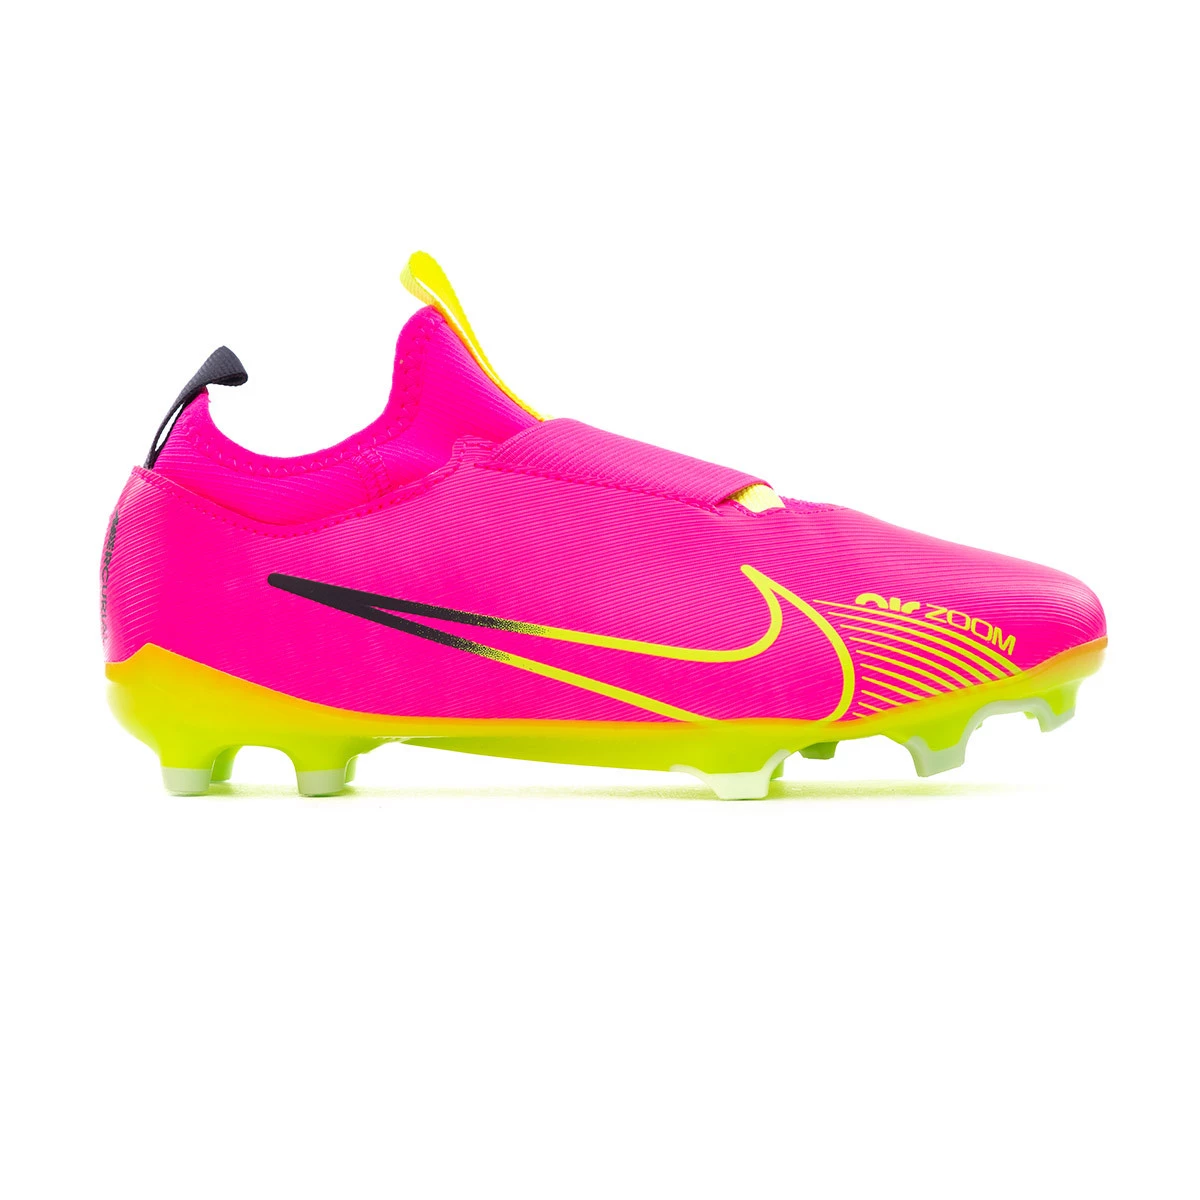 Nike Botas de fútbol Zoom Vapor para Hombre, Pink Blast Volt